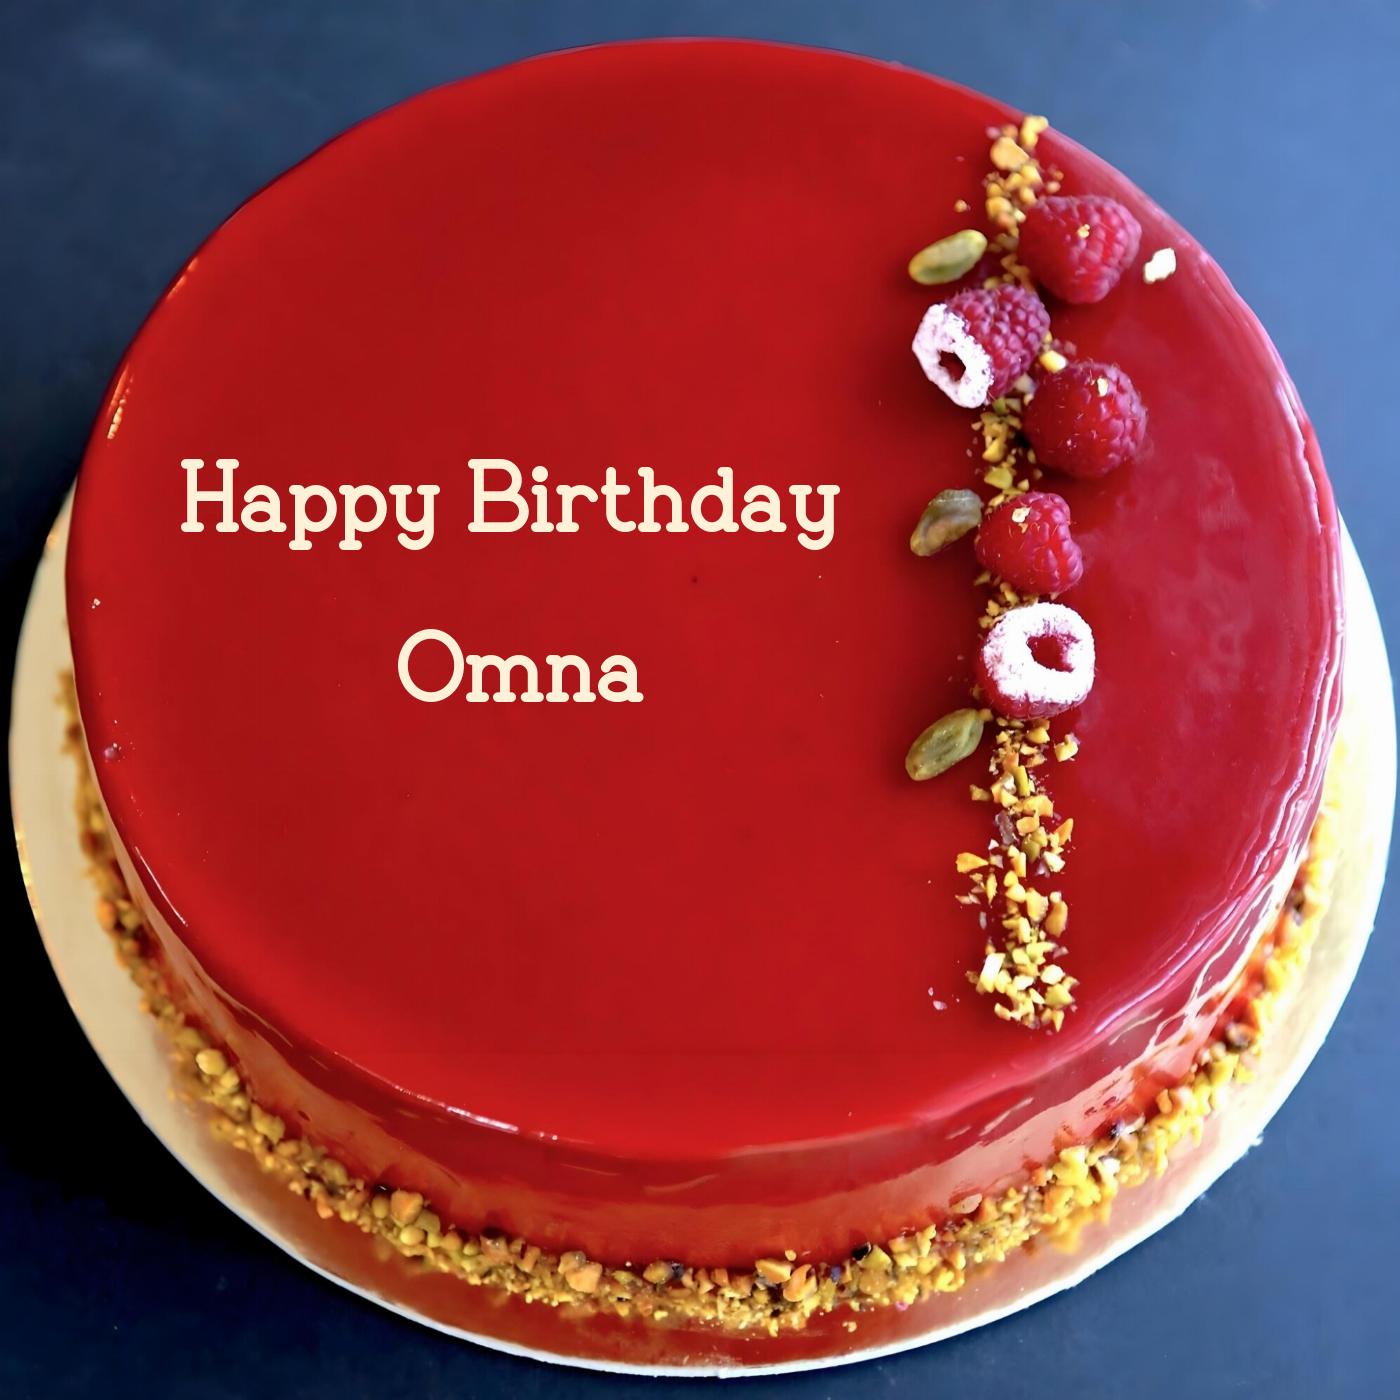 Happy Birthday Omna Red Raspberry Cake